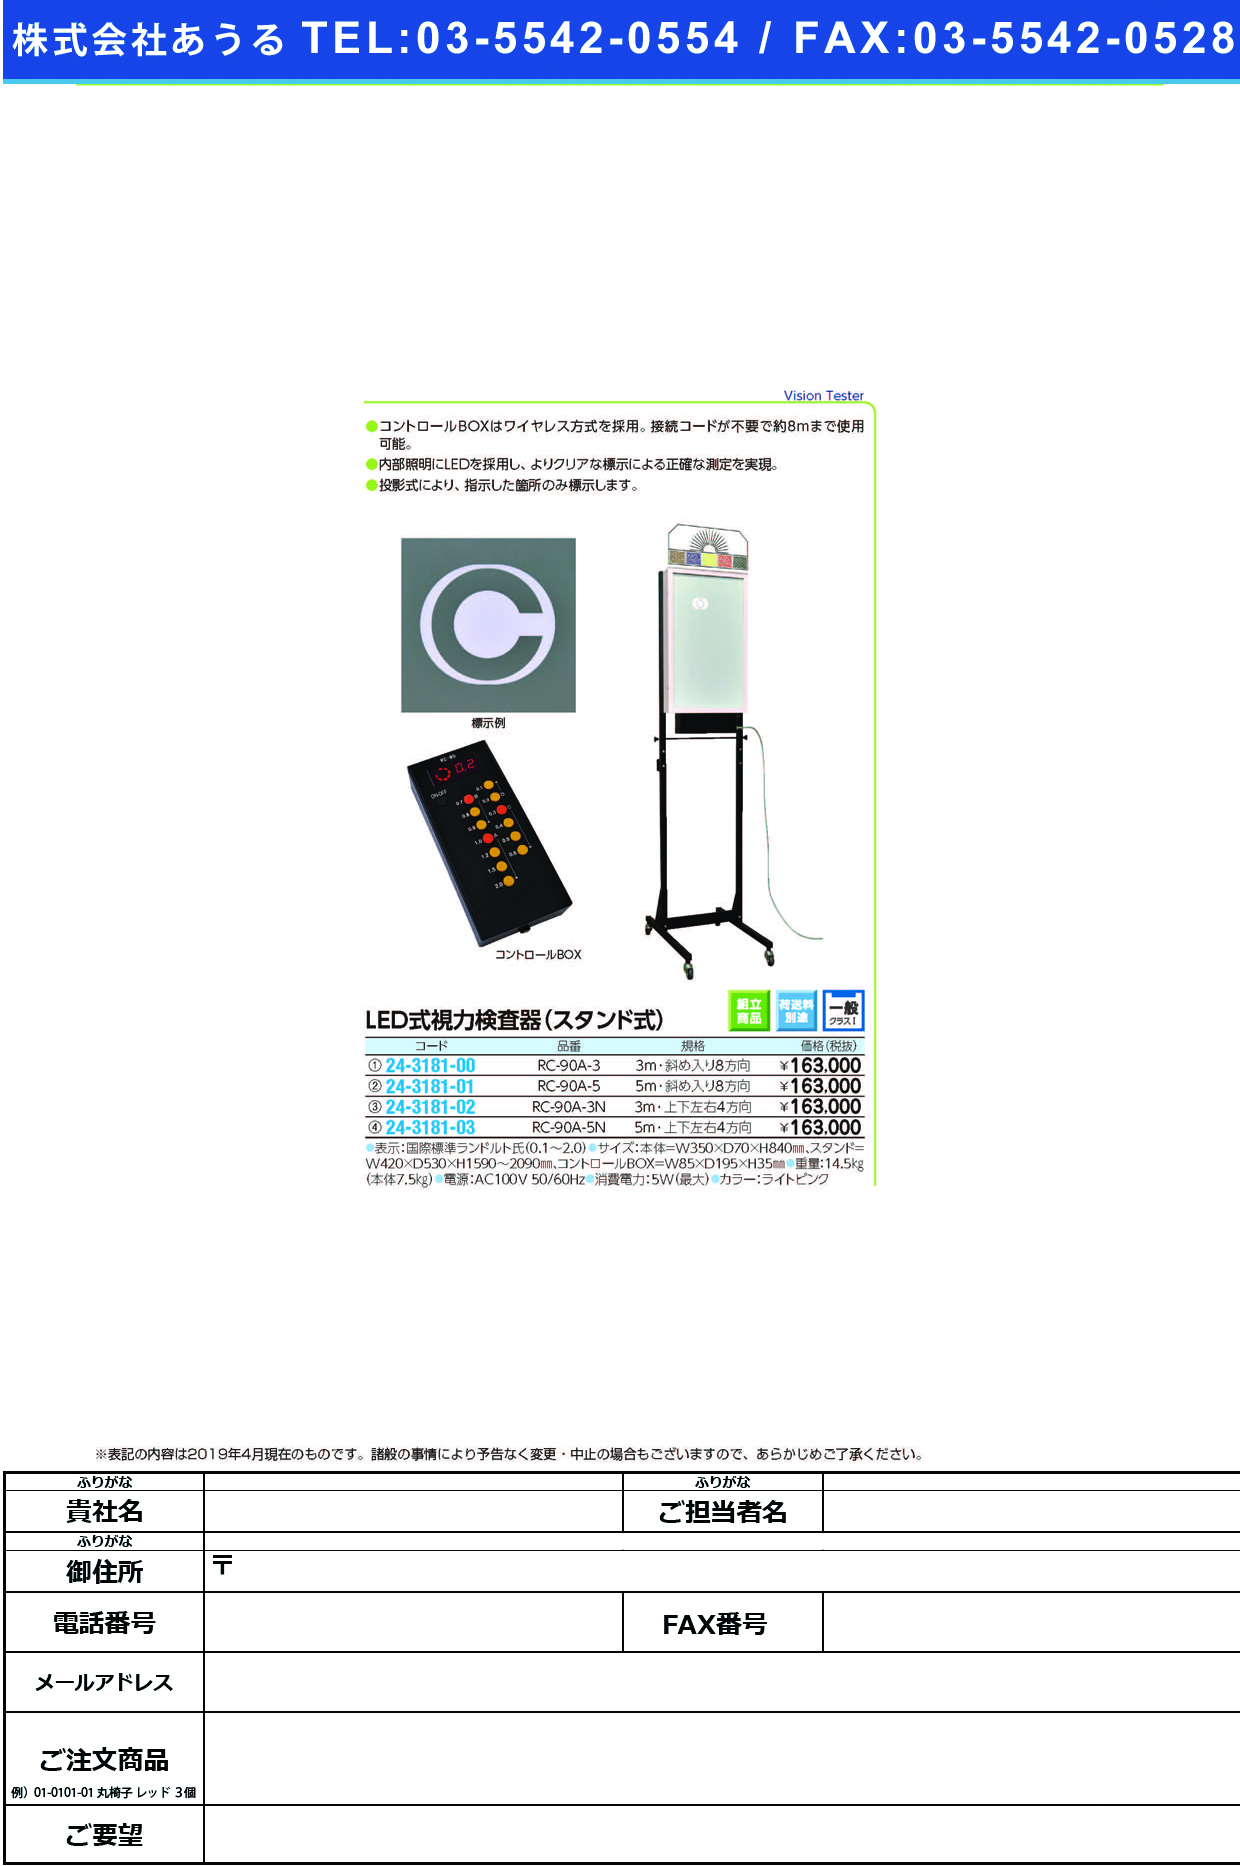 (24-3181-02)ＬＥＤ式視力検査器（スタンド式３ｍ用 RC-90A-3N(4ﾎｳｺｳ) LEDｼｷｼﾘｮｸｹﾝｻｷｽﾀﾝﾄﾞｼｷ【1台単位】【2019年カタログ商品】